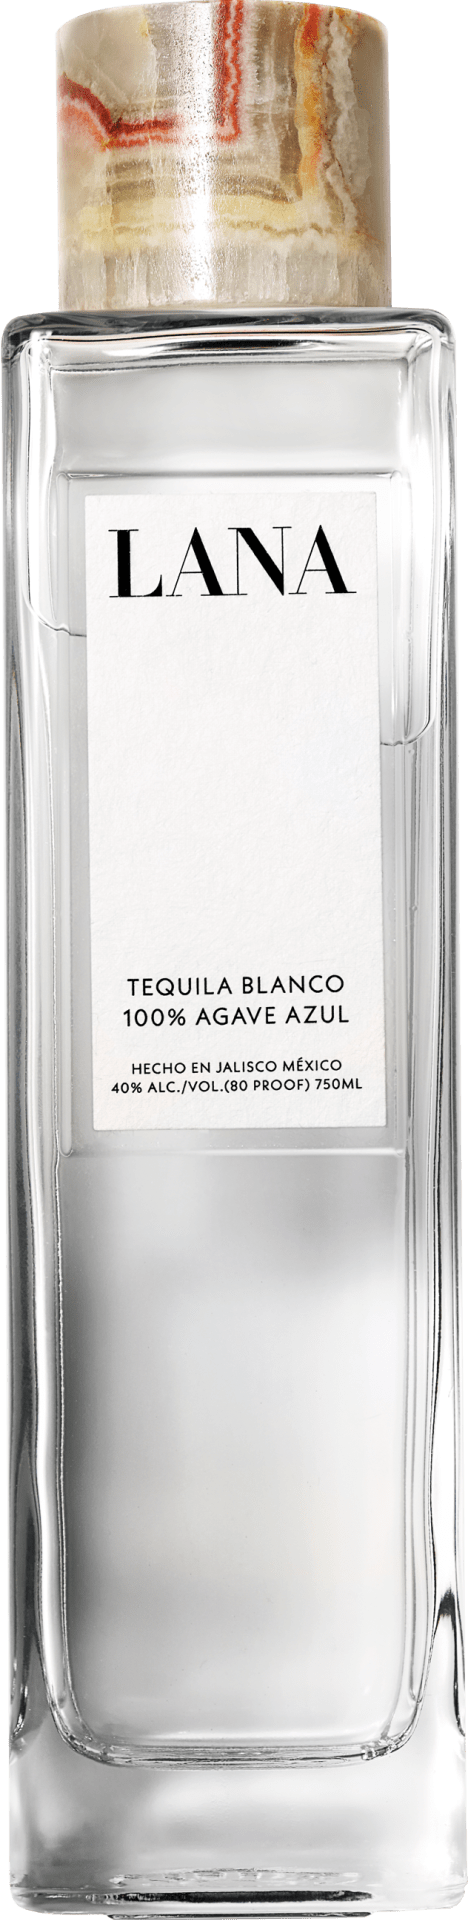 Lana Tequila Blanco